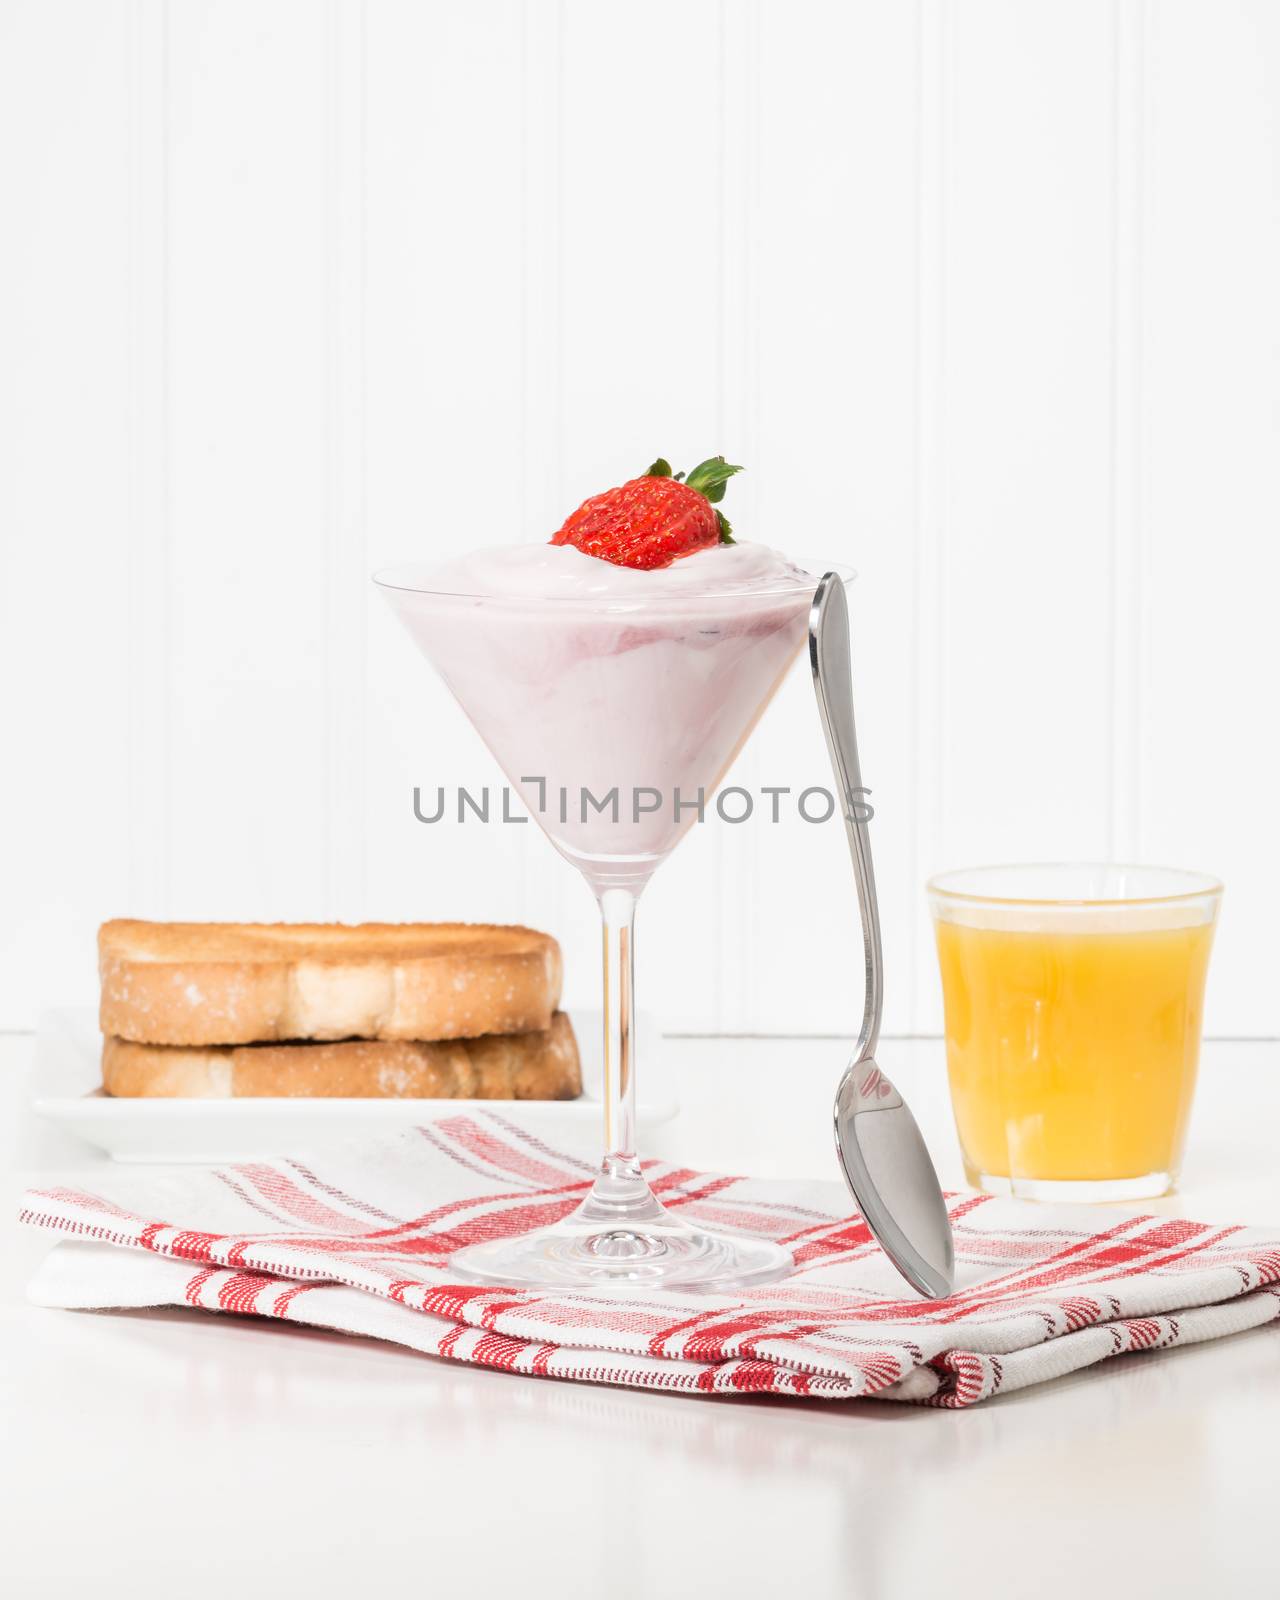 Glass filled with greek yogurt garnished with a ripe strawberry.